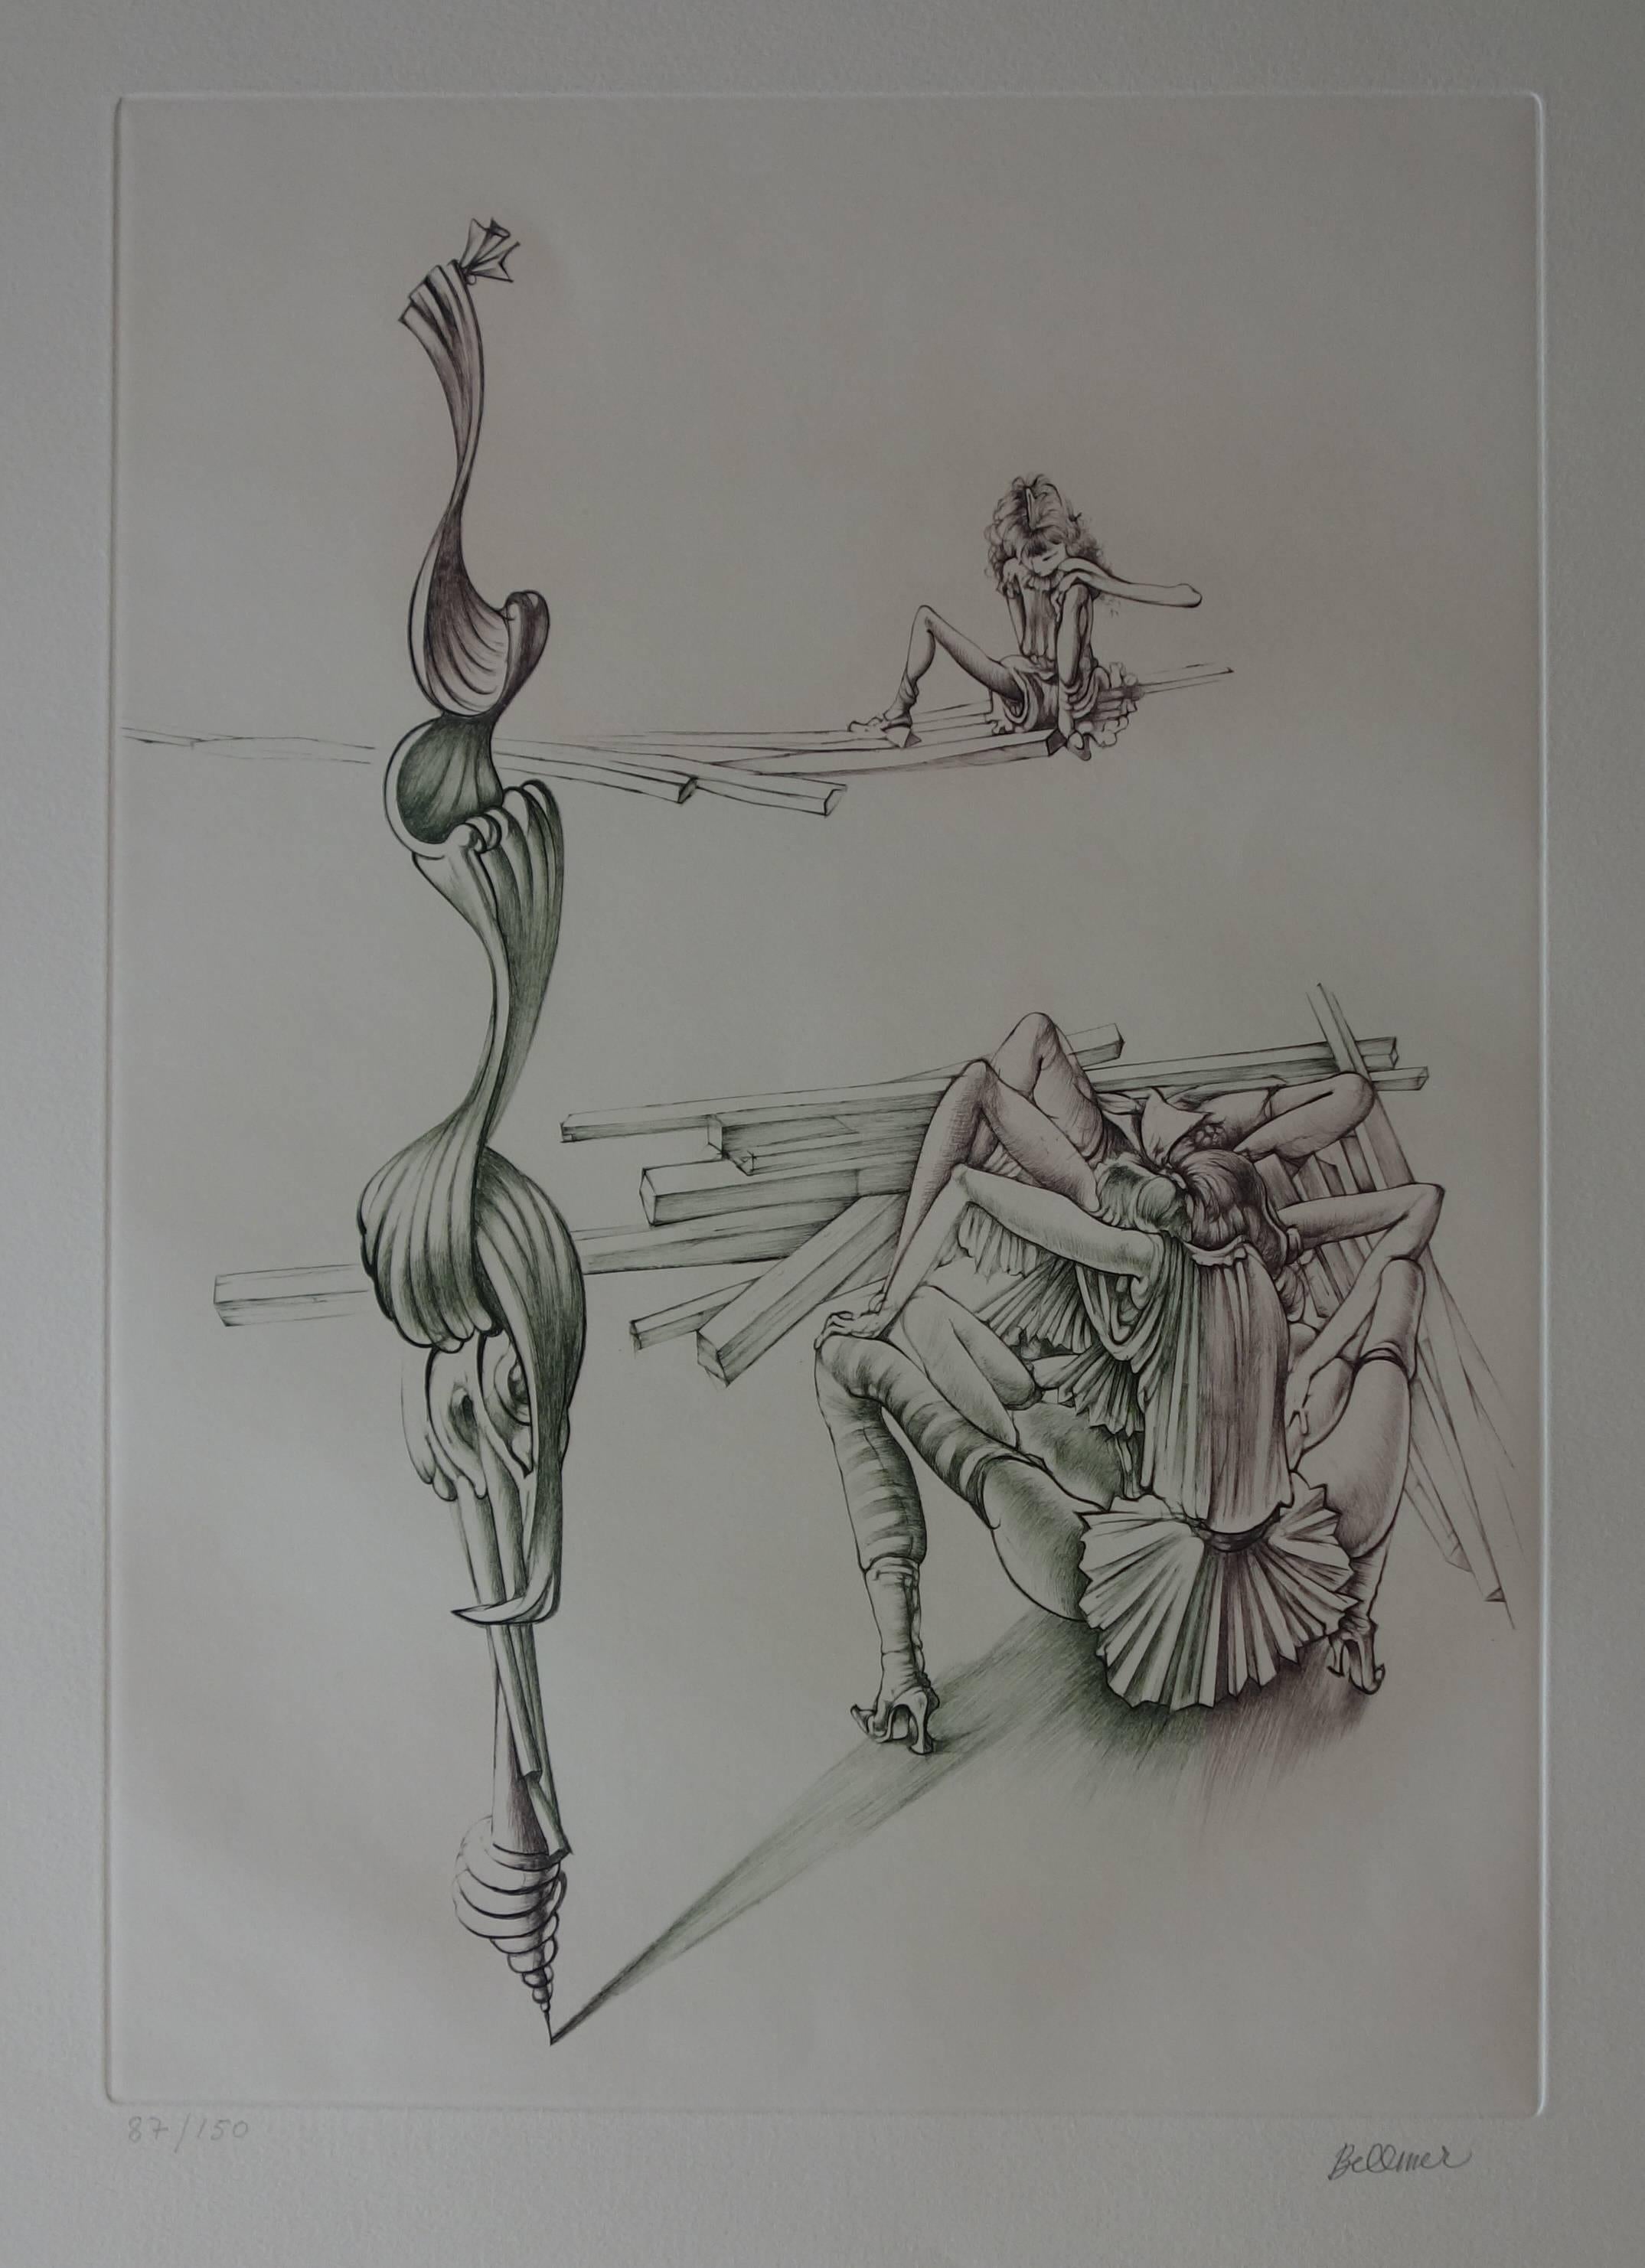 Hans Bellmer Figurative Print - Woman on Stage - Original handsigned etching - 150ex